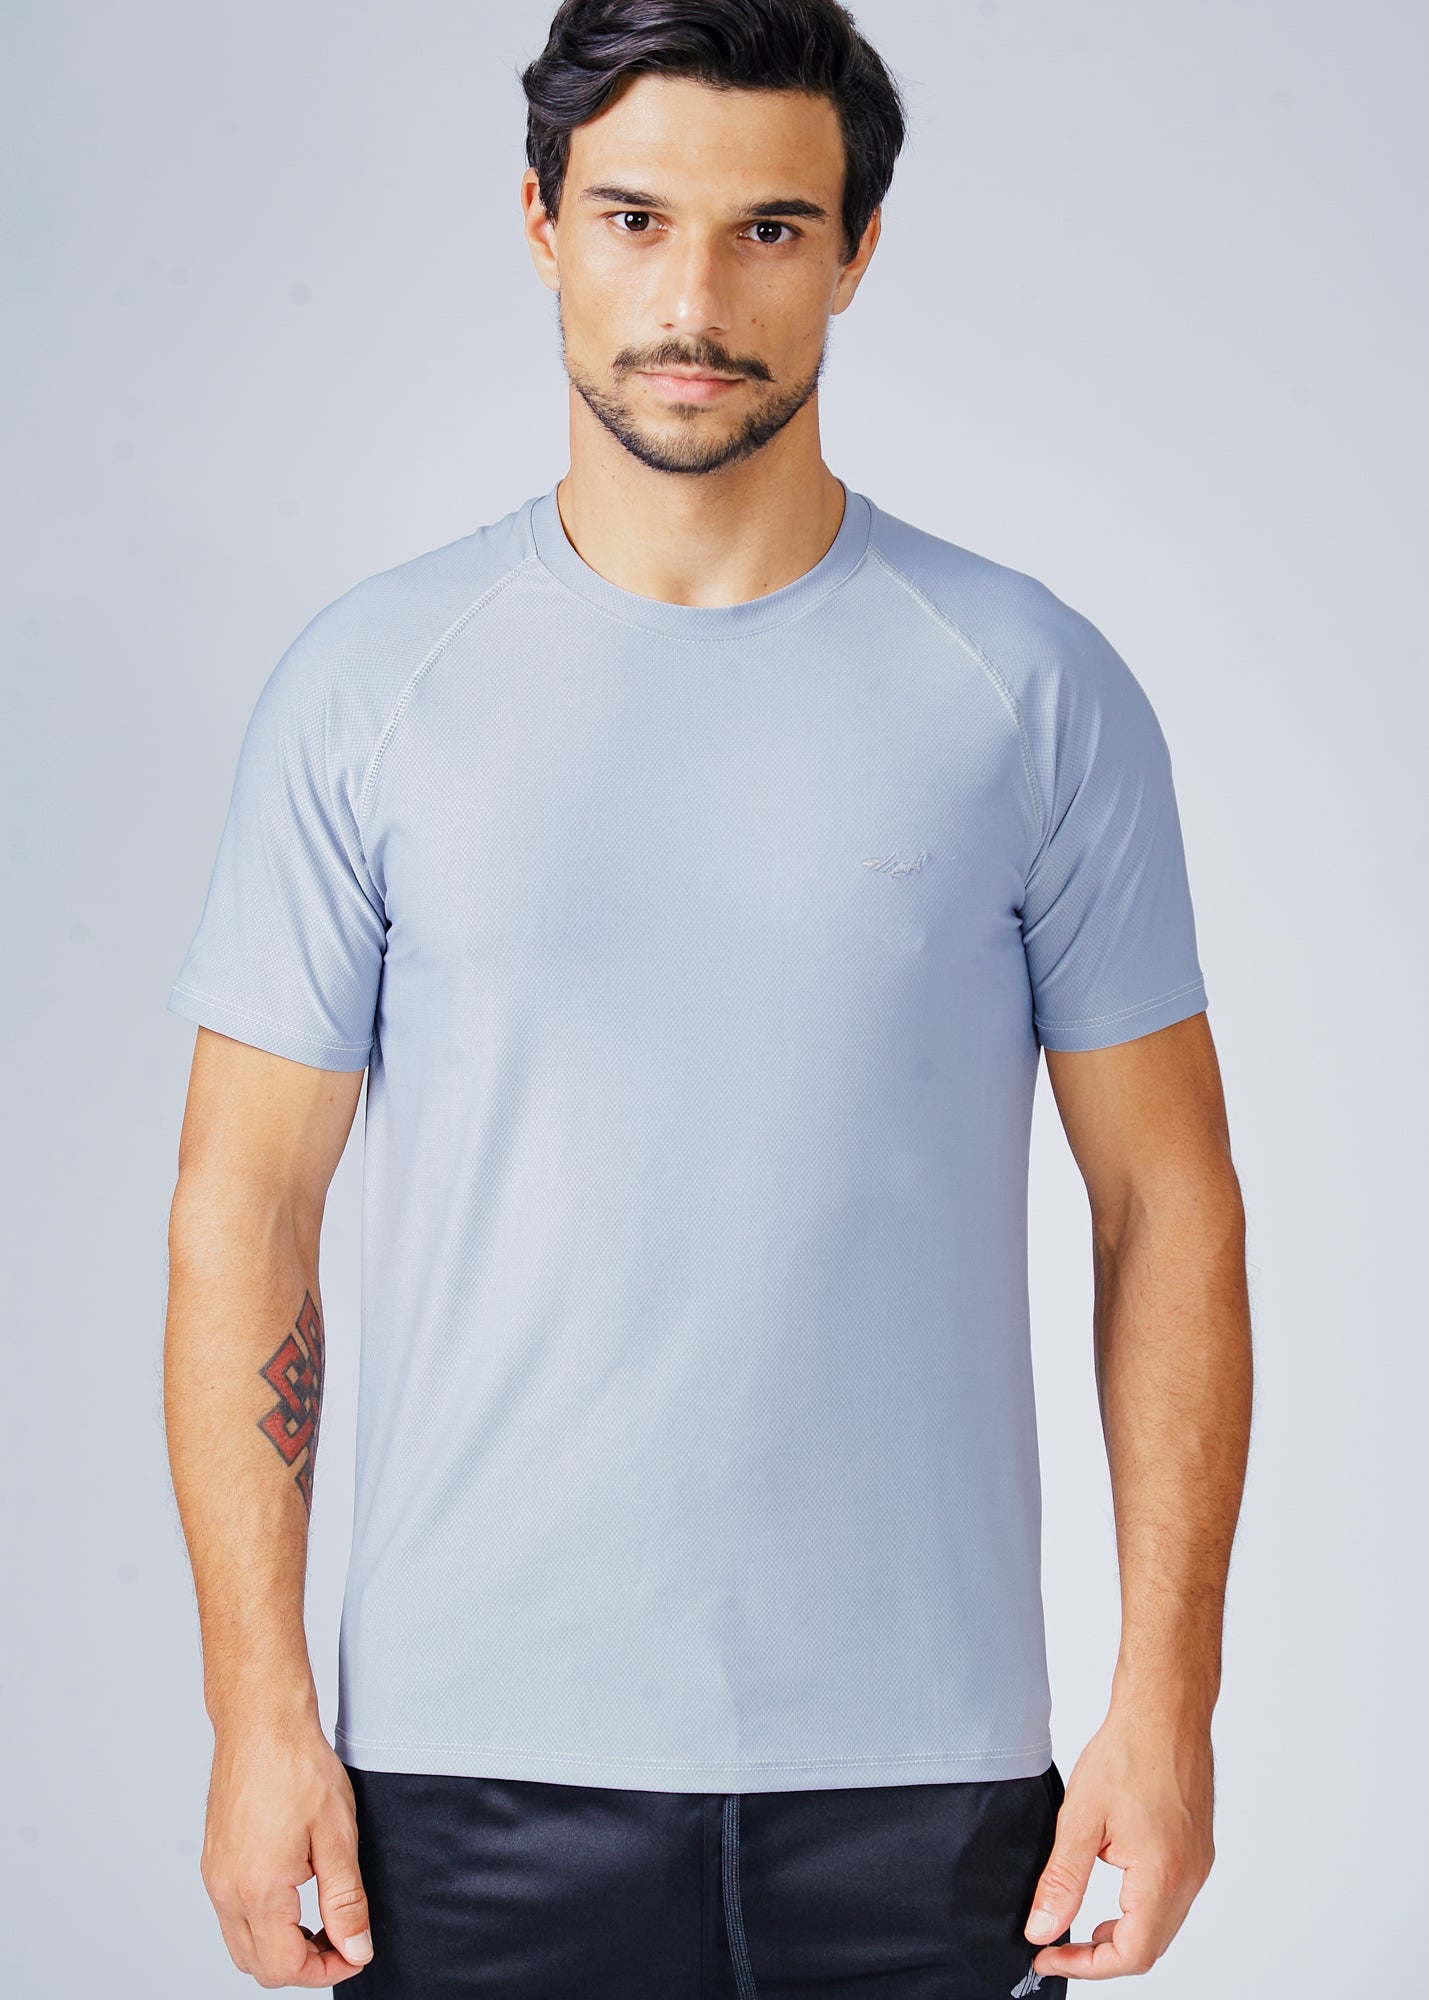 Camiseta Slim Dry Fit - Cinza